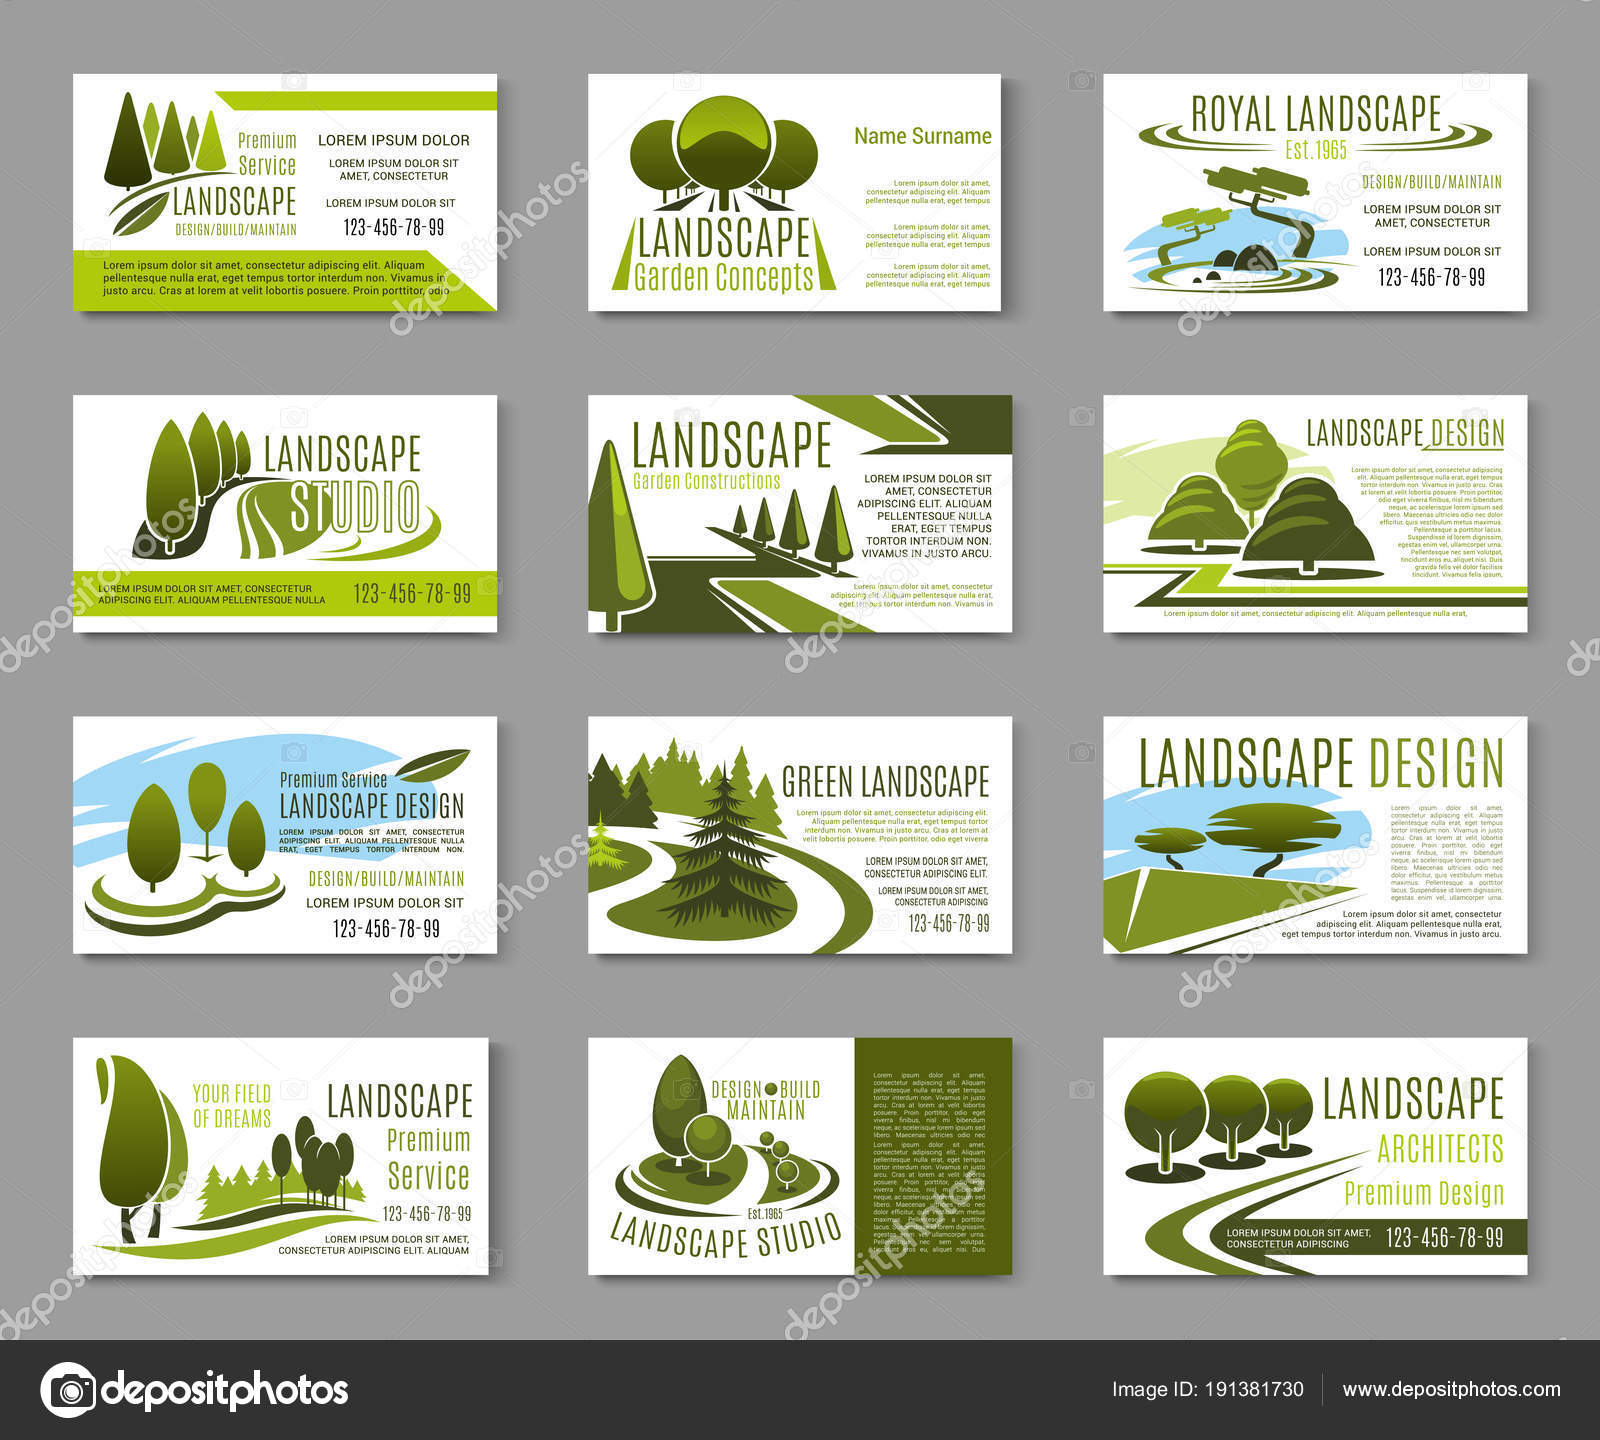 Landscape Design Business Cards | Landscape Design Studio Throughout Gardening Business Cards Templates